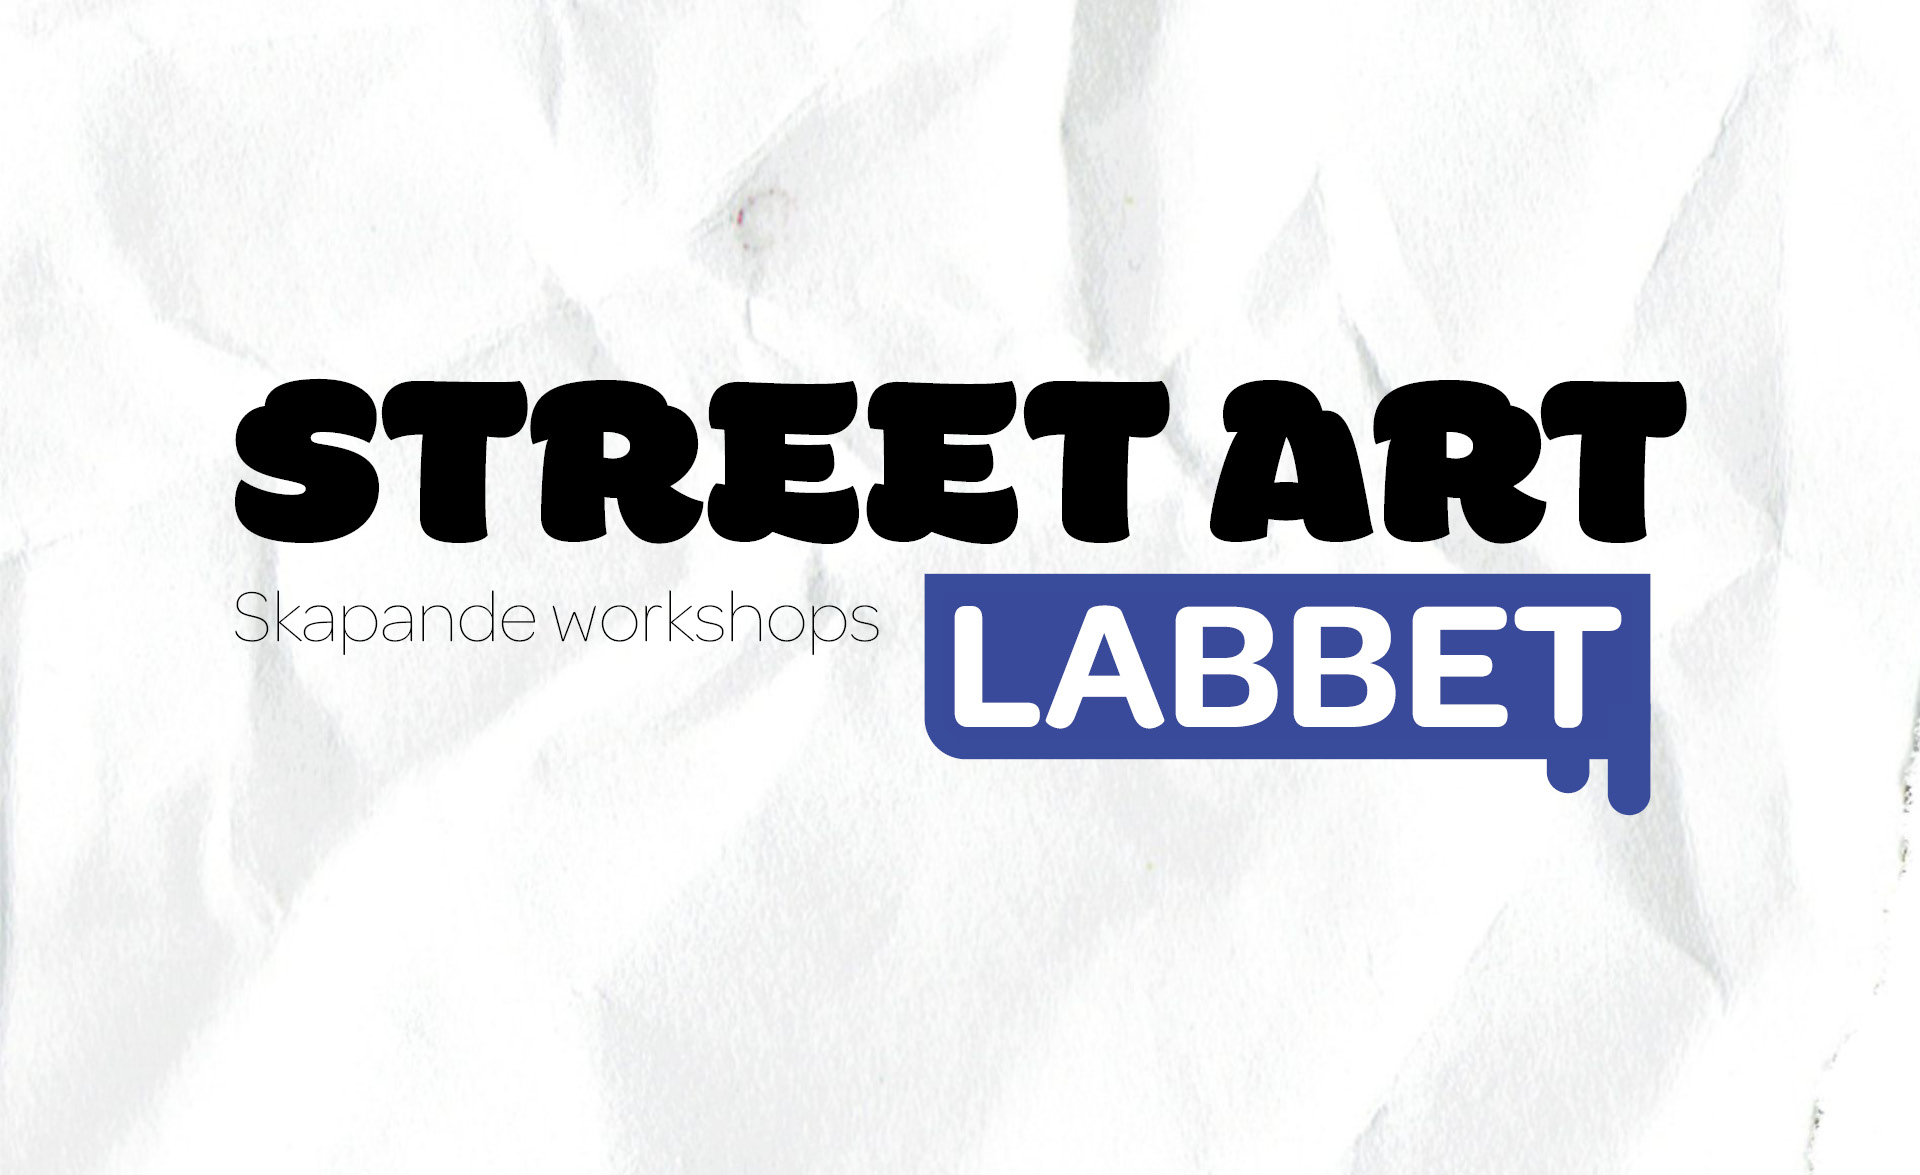 Logotyp med texten Street art labbet Skapande workshops. Mot en vit bakgrund i form av ett skrynkligt papper.  